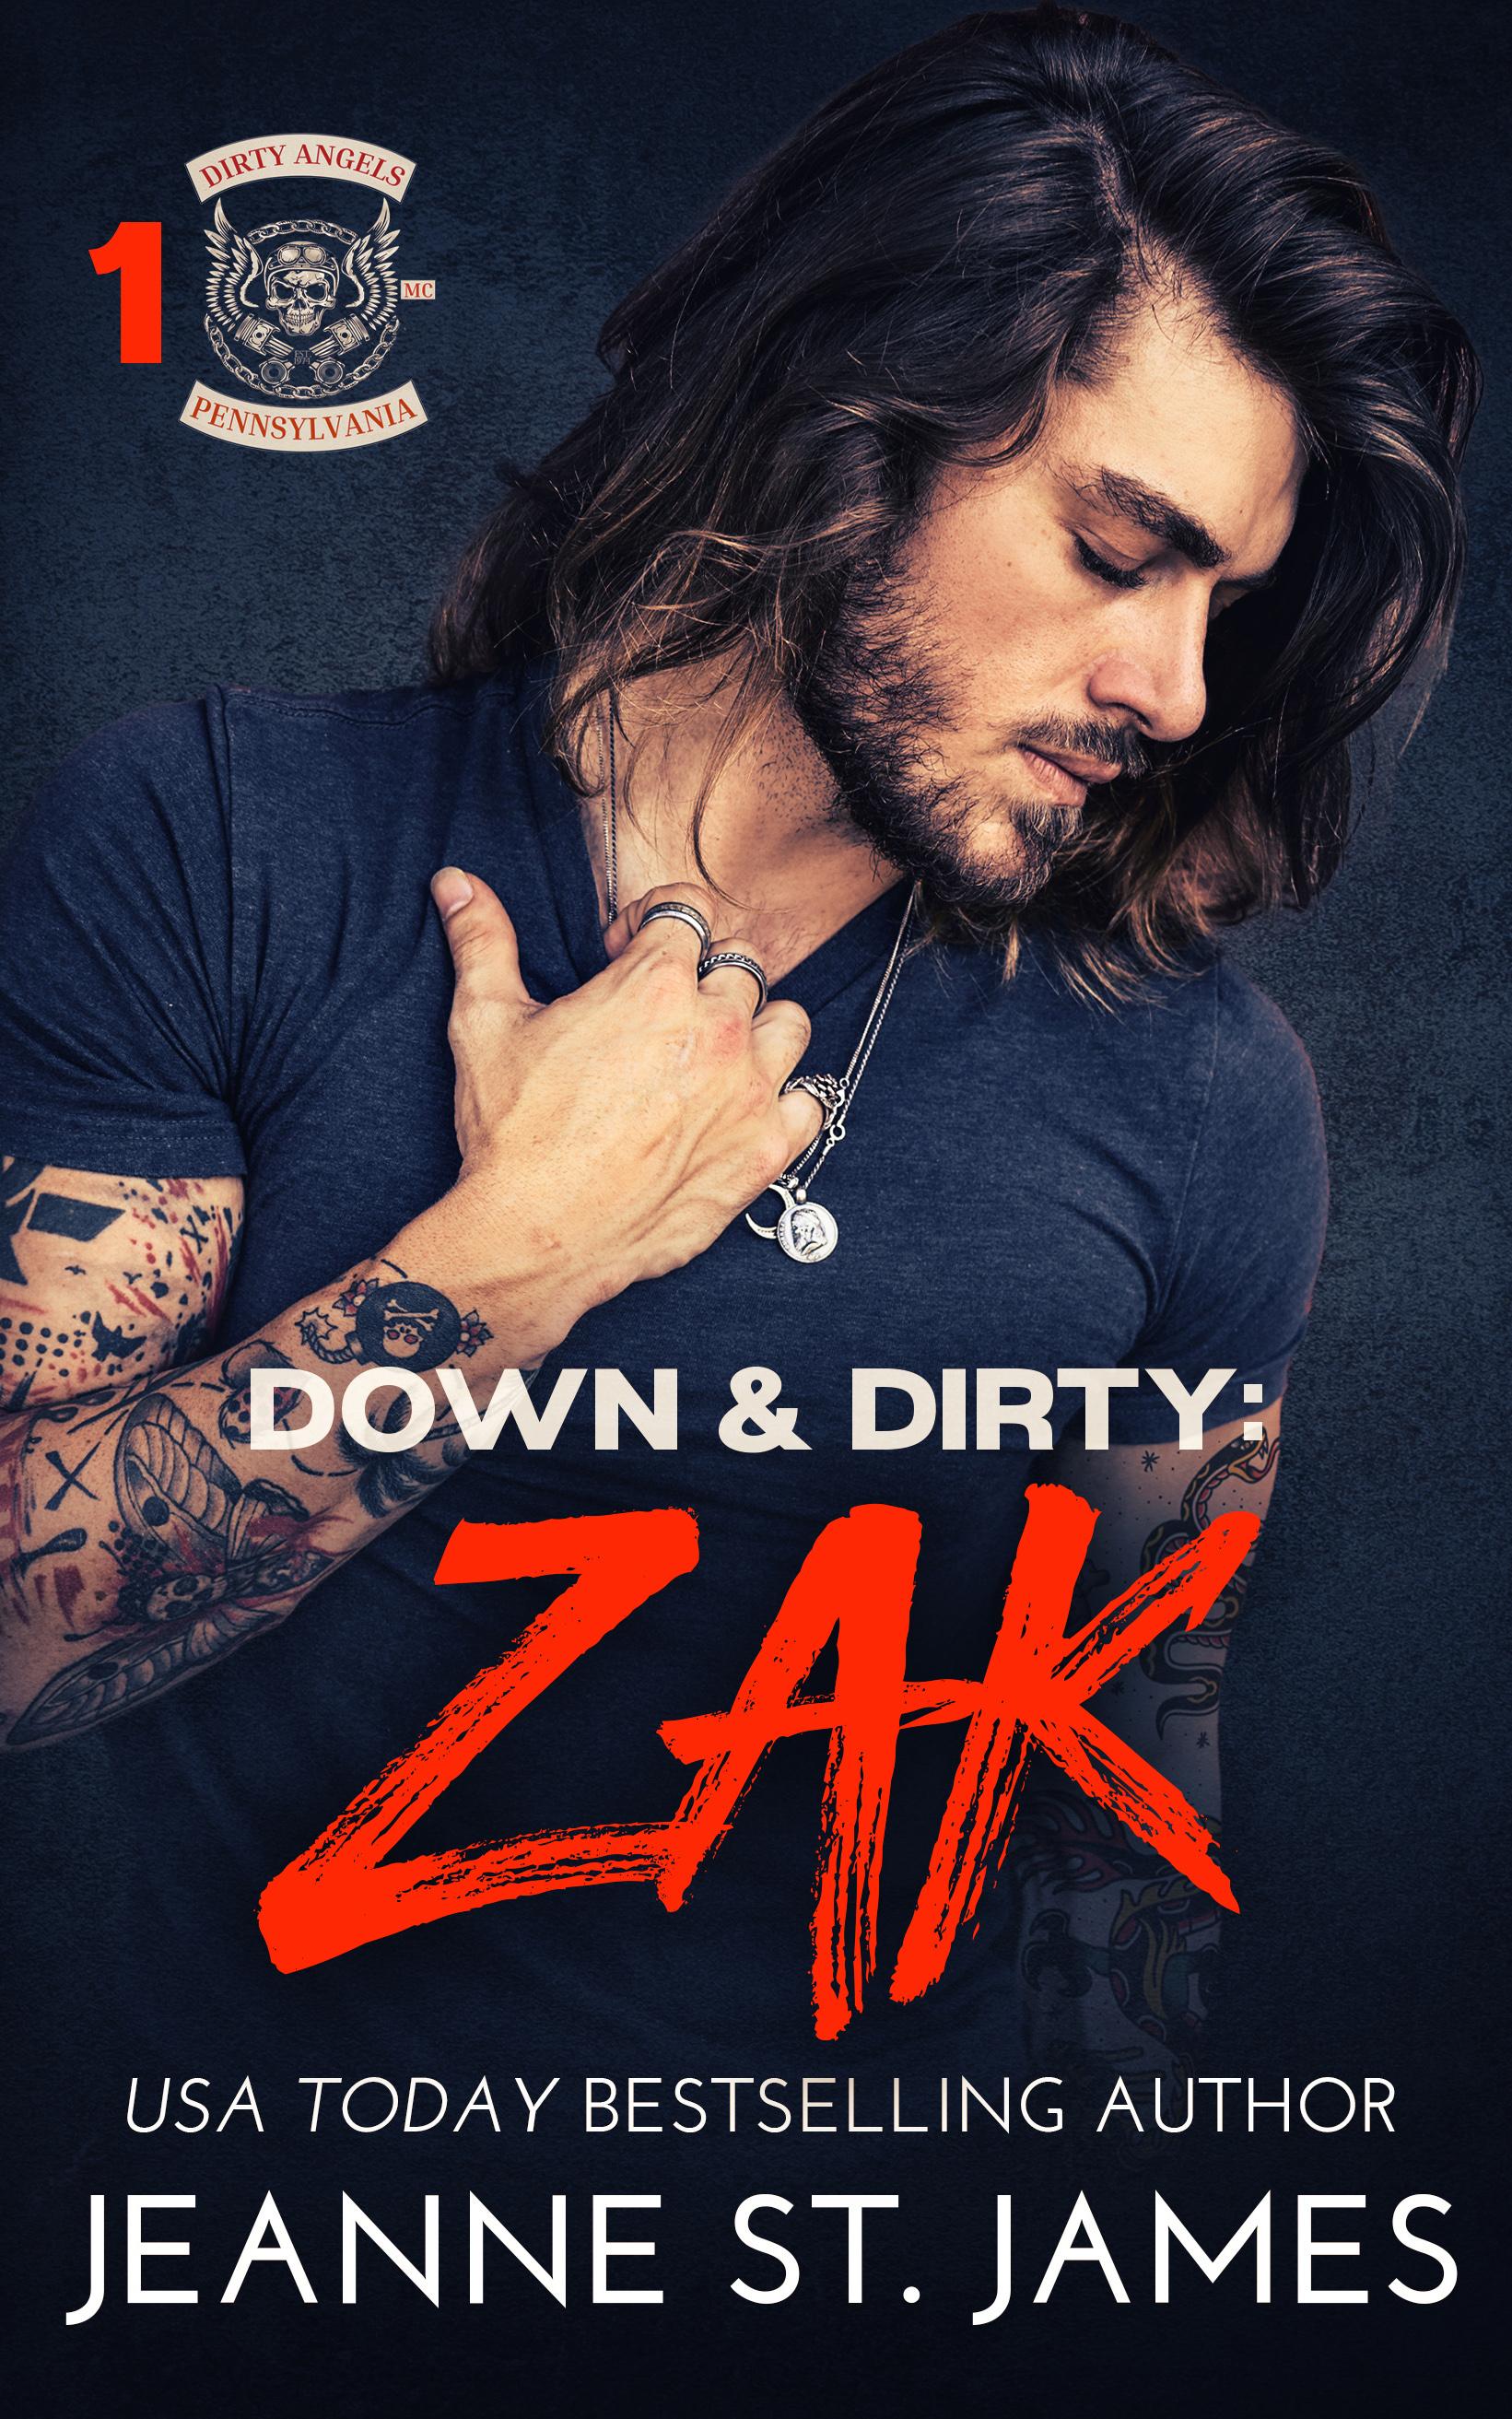 Down & Dirty: Zak